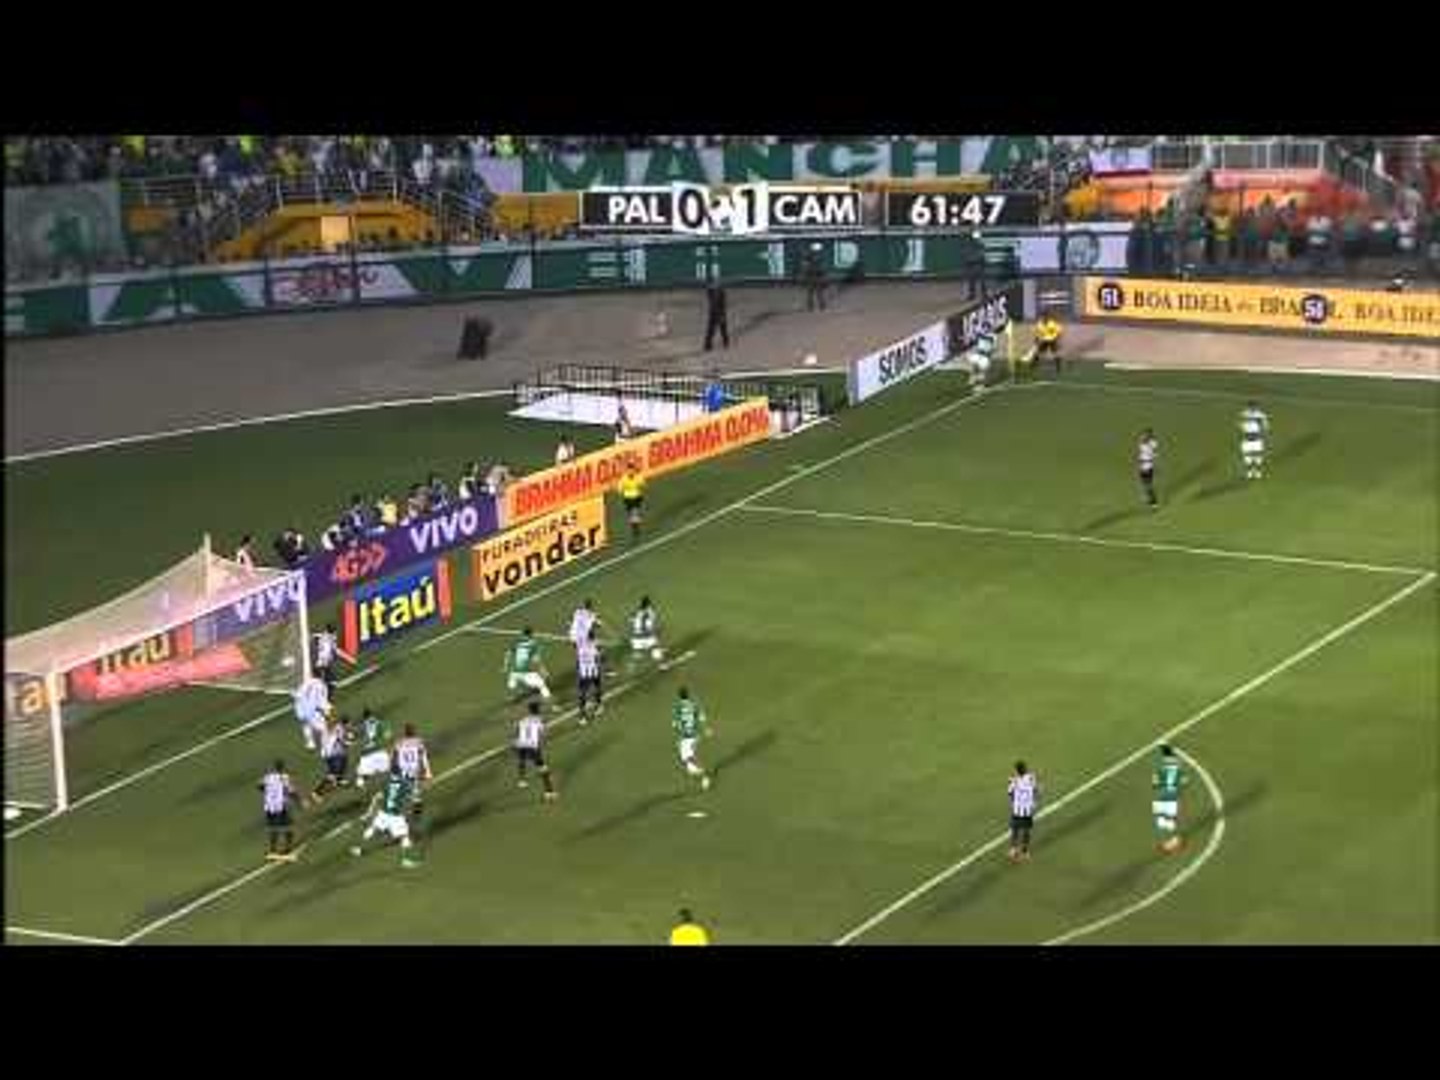 Palmeiras vs. Atletico Mineiro - Vídeo Dailymotion